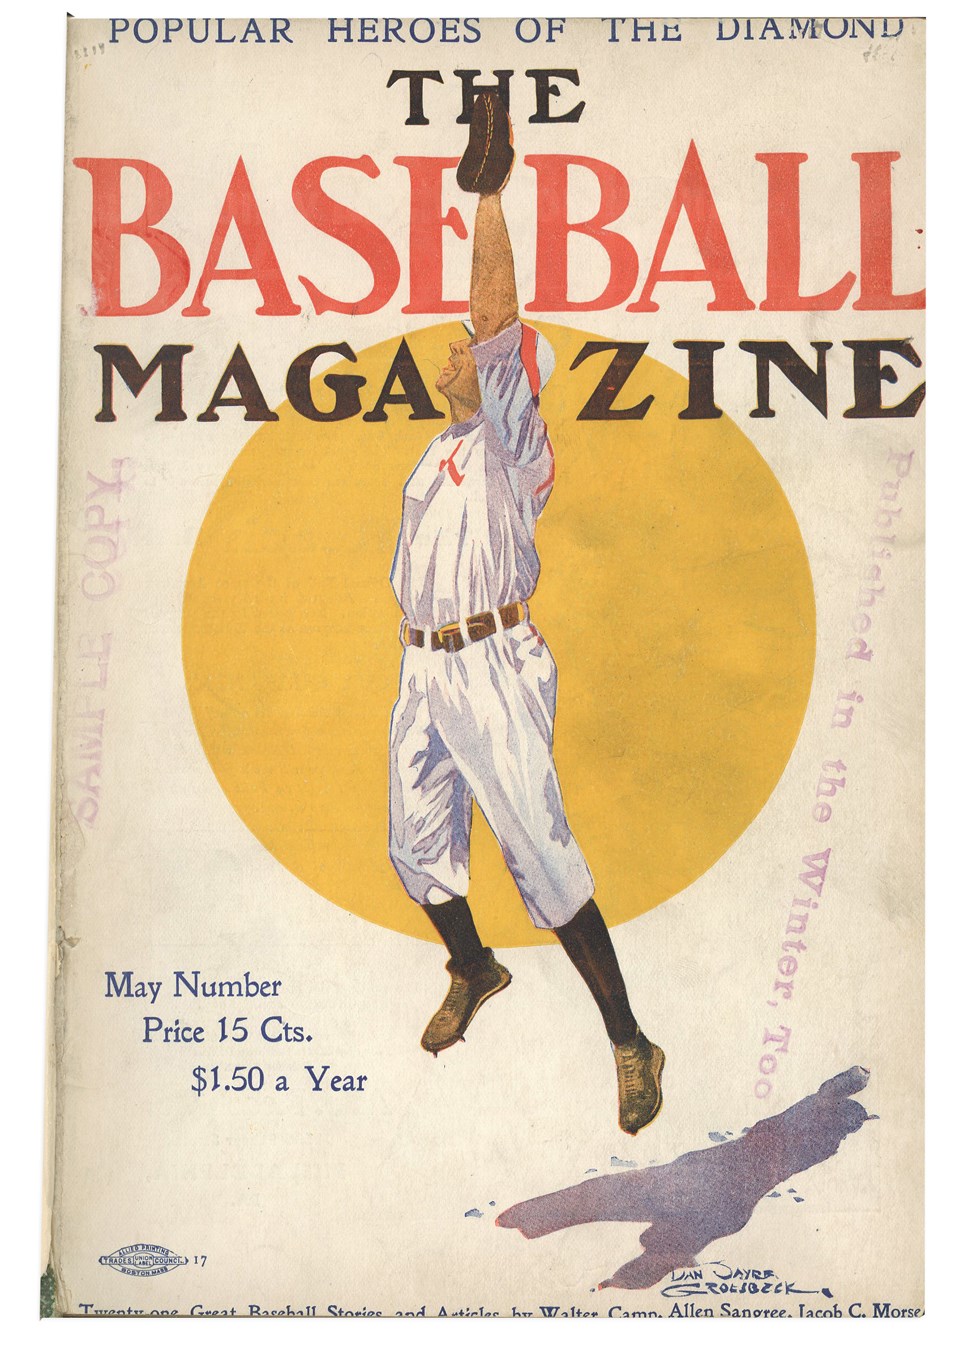 - FIRST EVER 1908 Baseball Magazine Presentation Volume w/Rare Issue #1 - Inscribed by President to Boston B.B.C. Captain John Morill